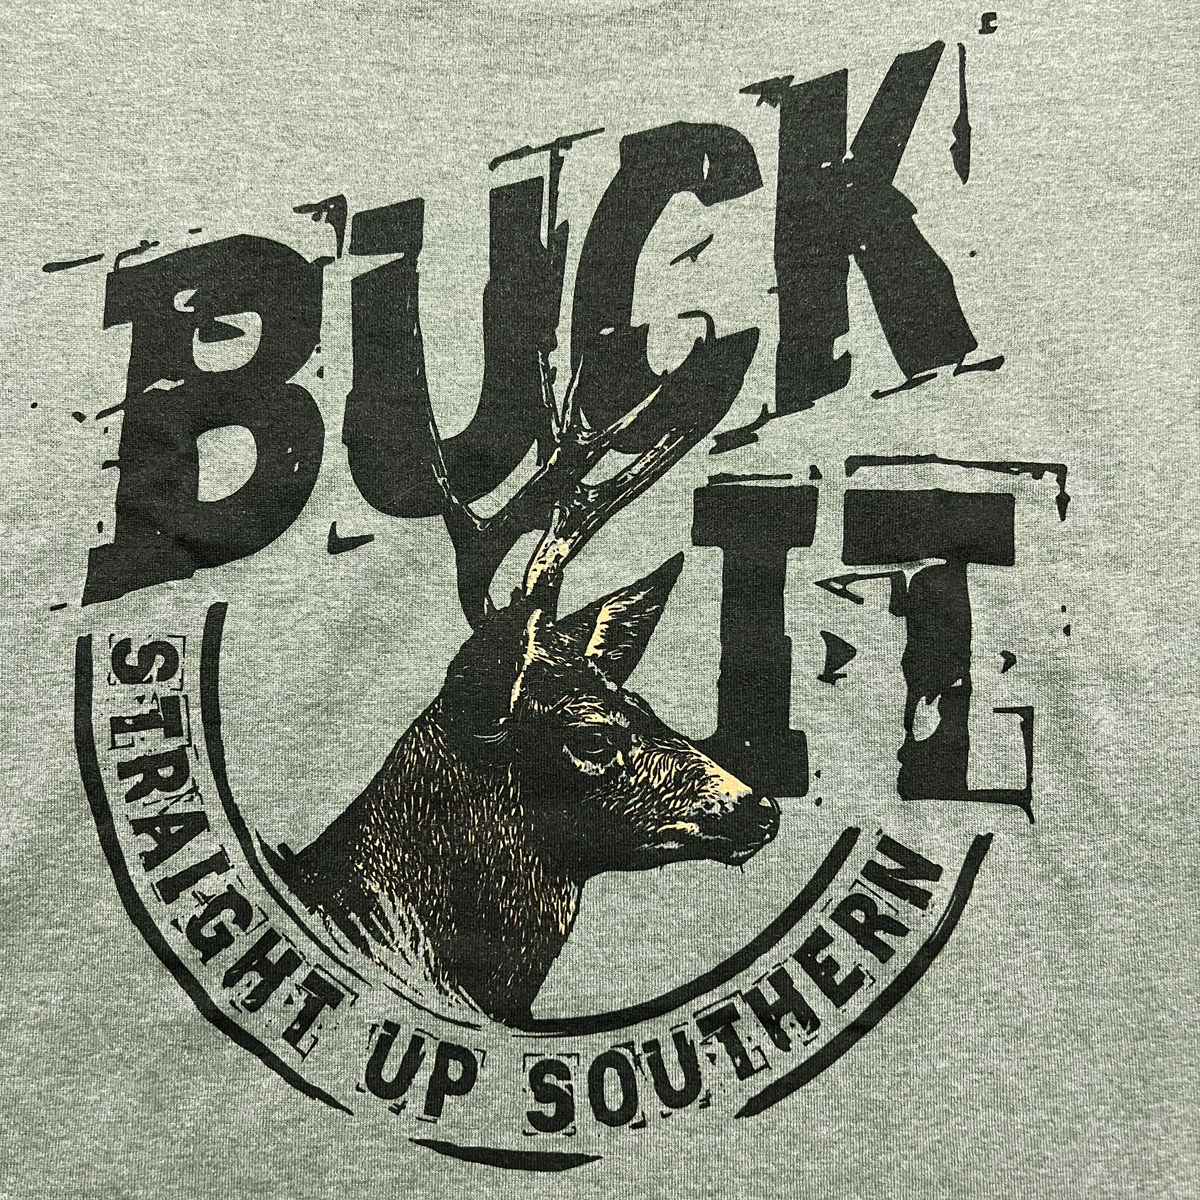 Buck It - "BUCK IT" with Whitetail Buck Hunting Tee